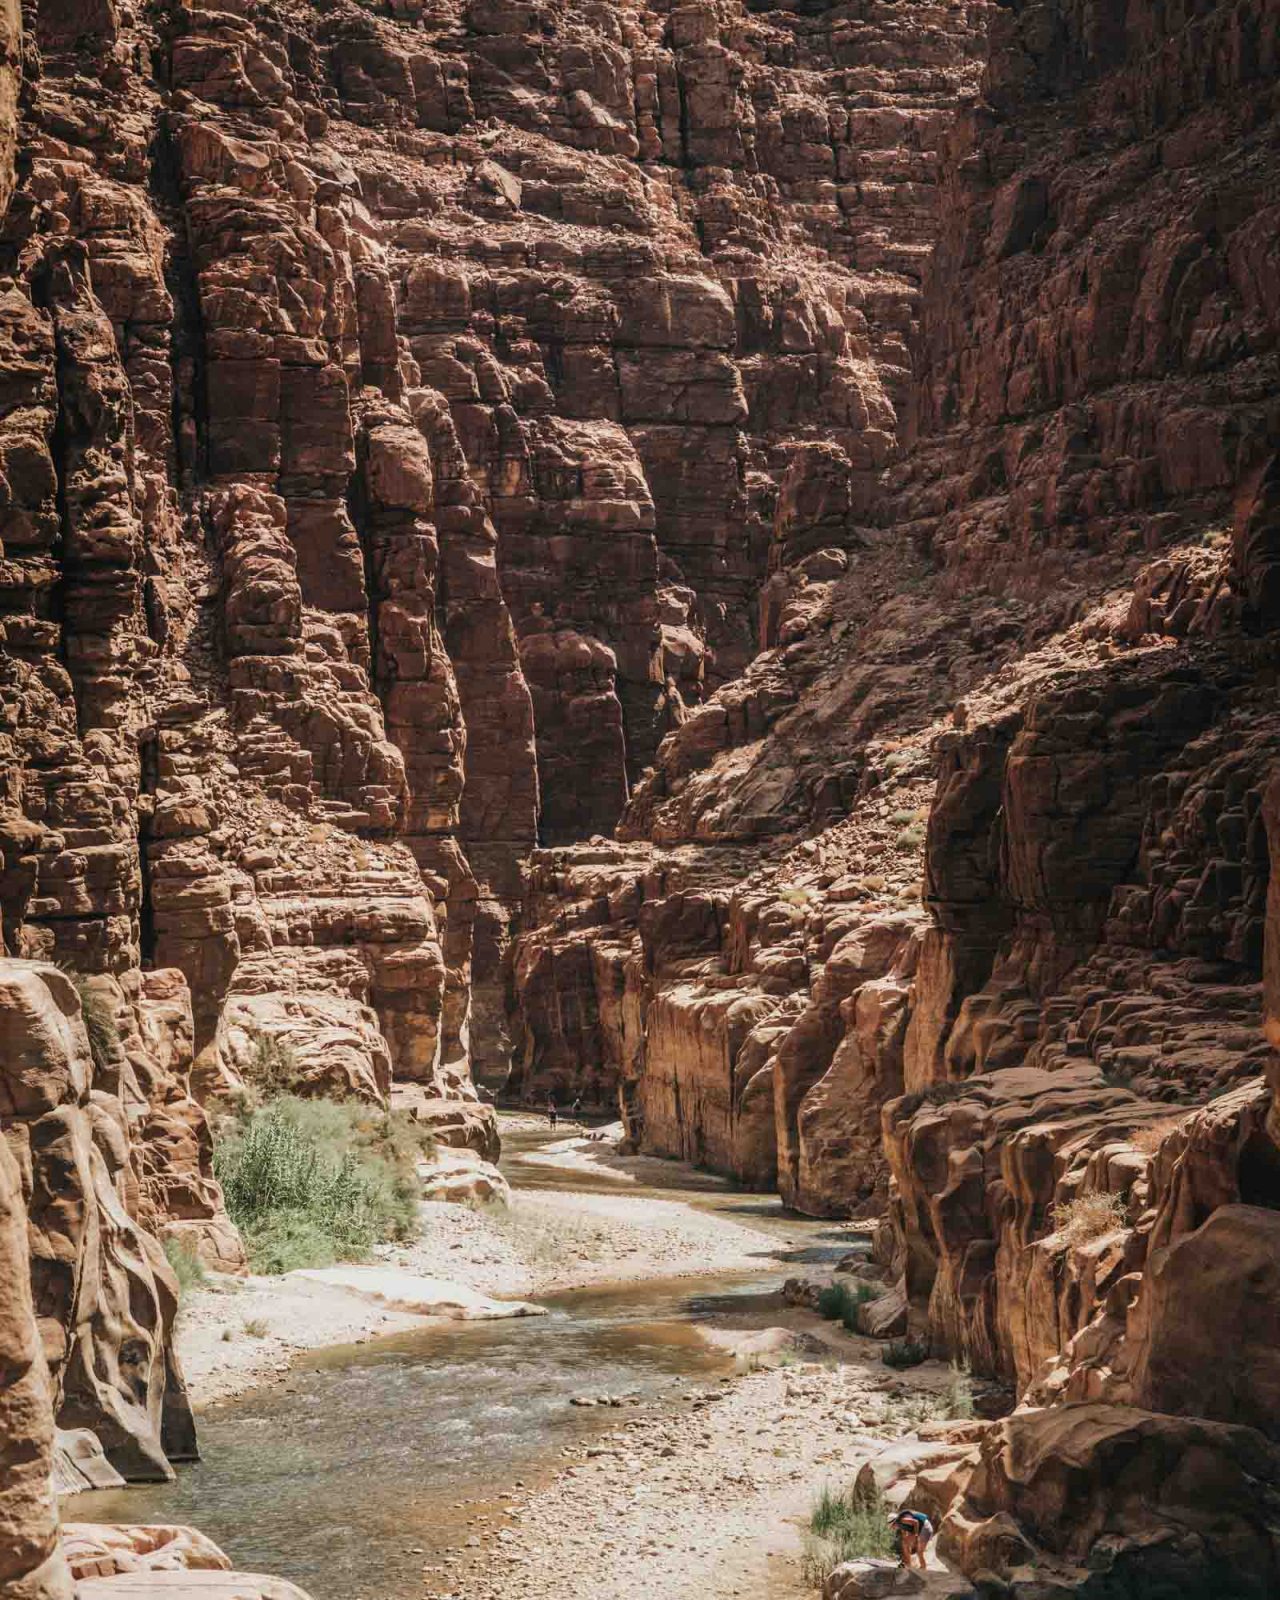 Ecotourism in Wadi Mujib Jordan is on the rise